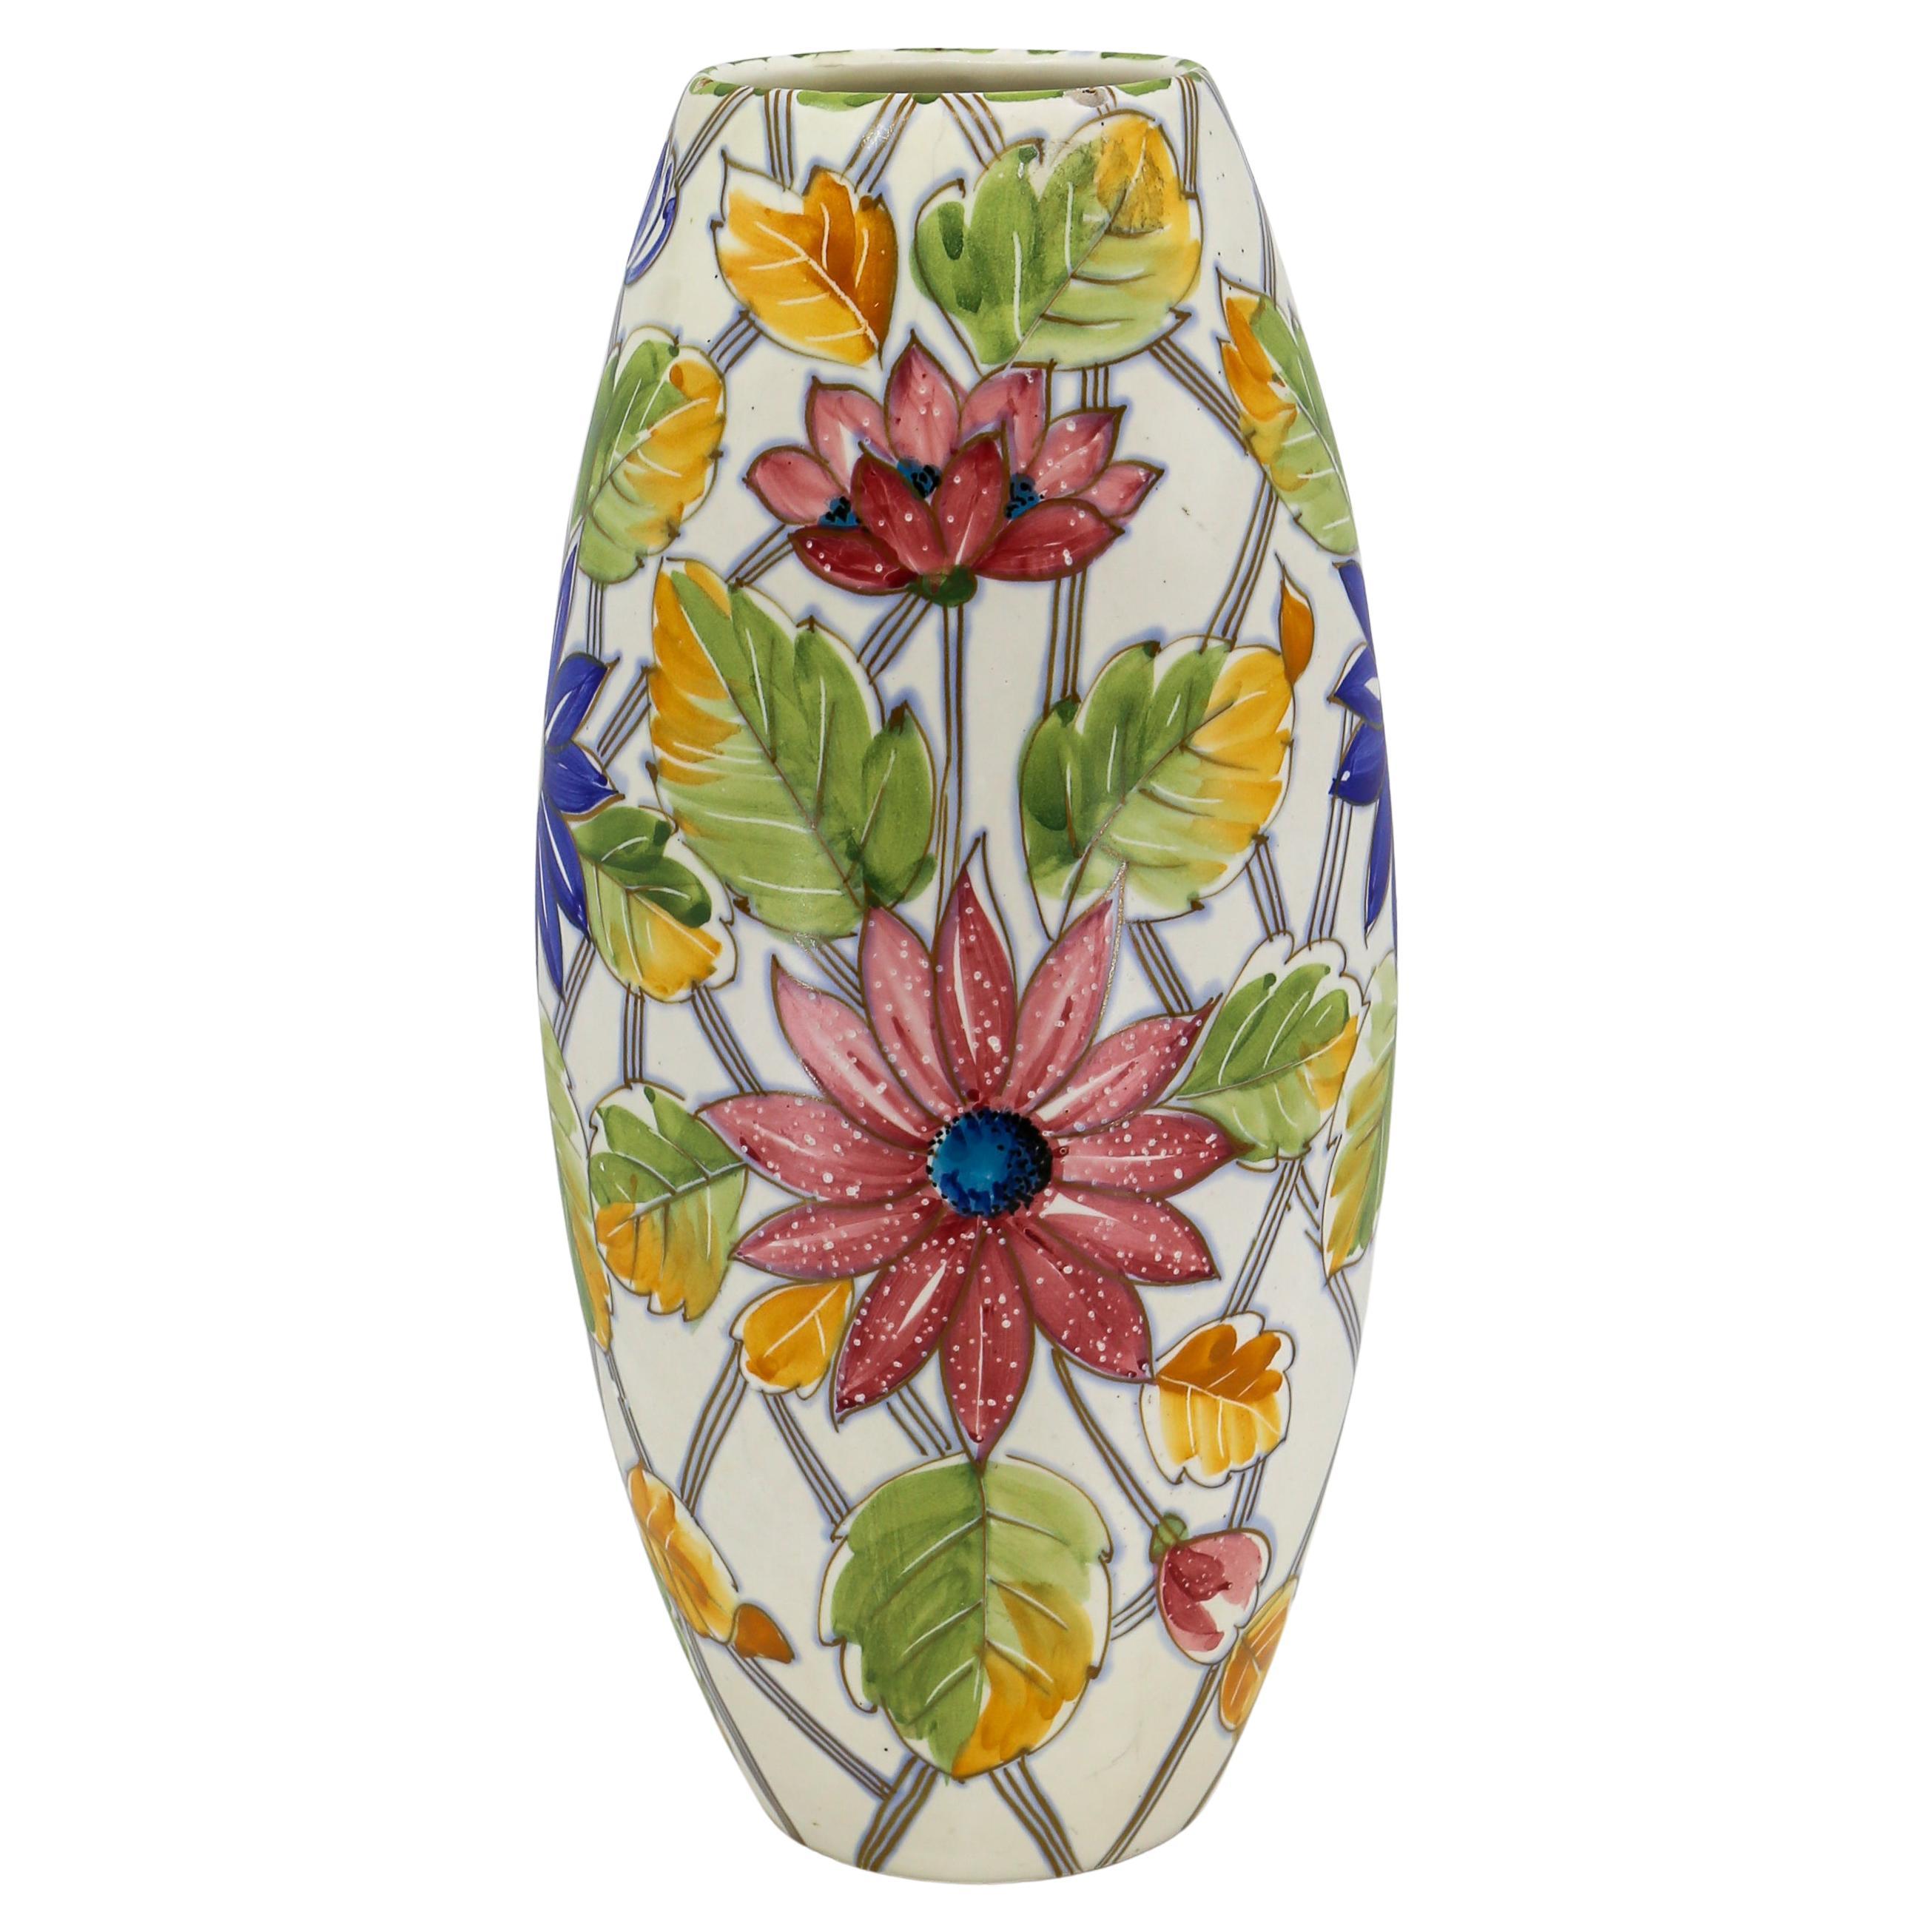 Ovale italienische Vase mit Blumenmotiv